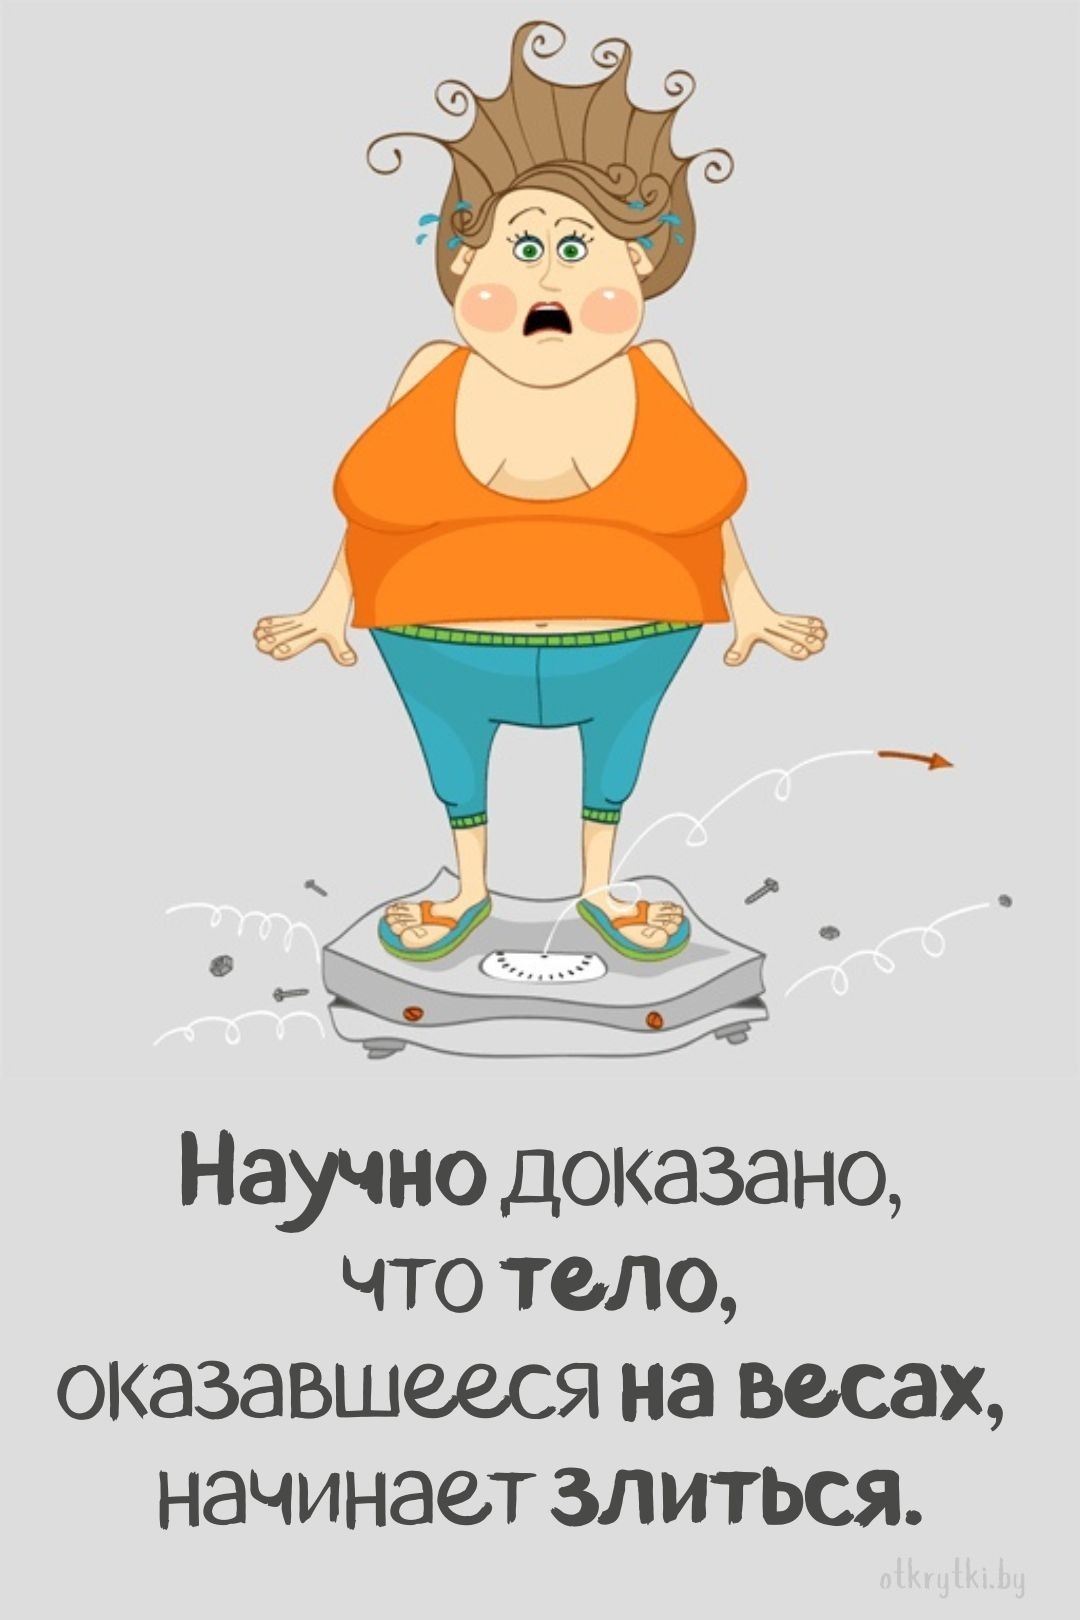 Креативная открытка про вес с юмором